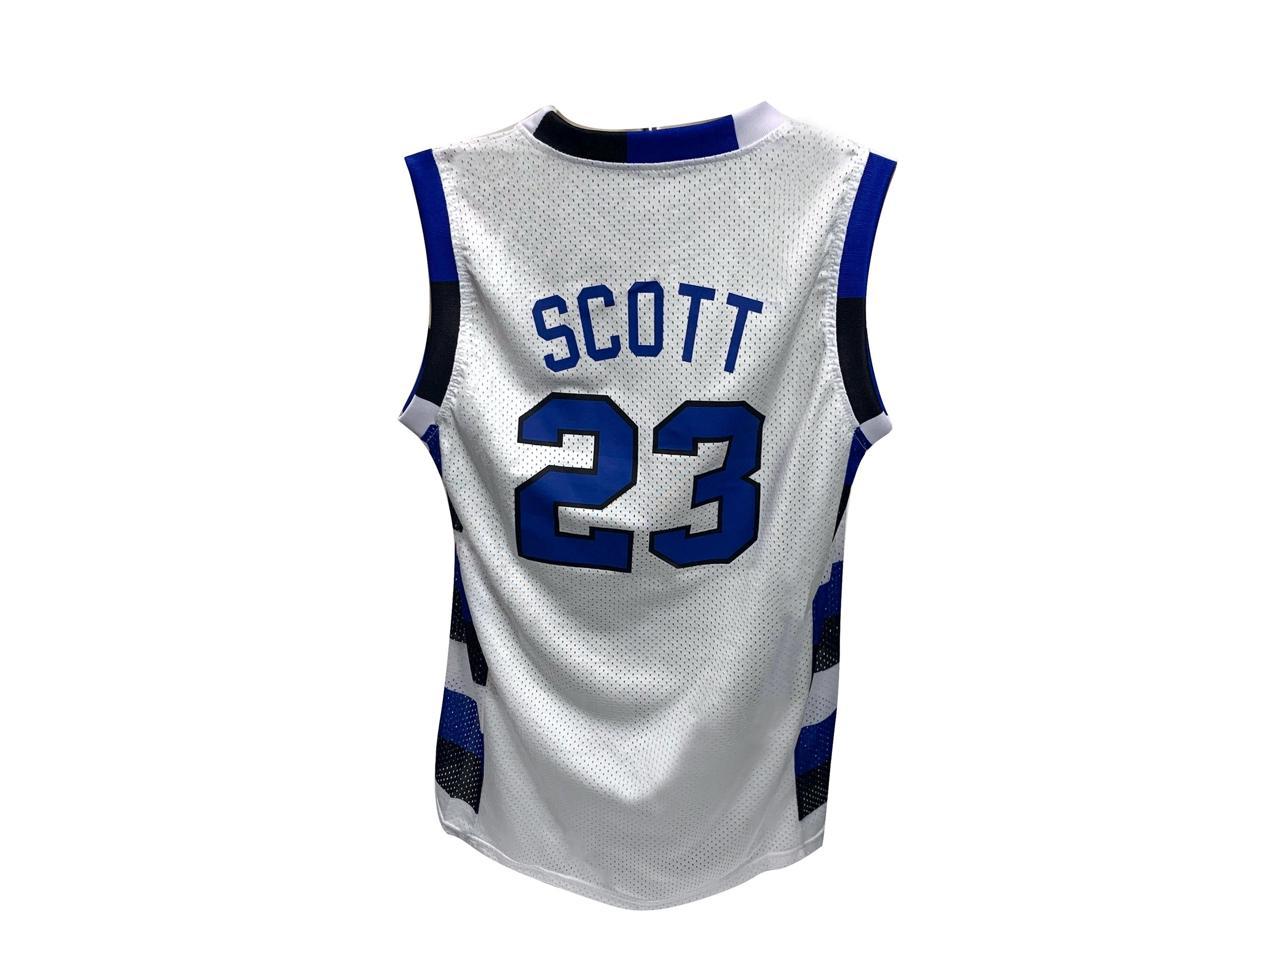 Nathan Scott #23 Ravens Basketball Jersey White One Tree Hill TV Adult Costume 